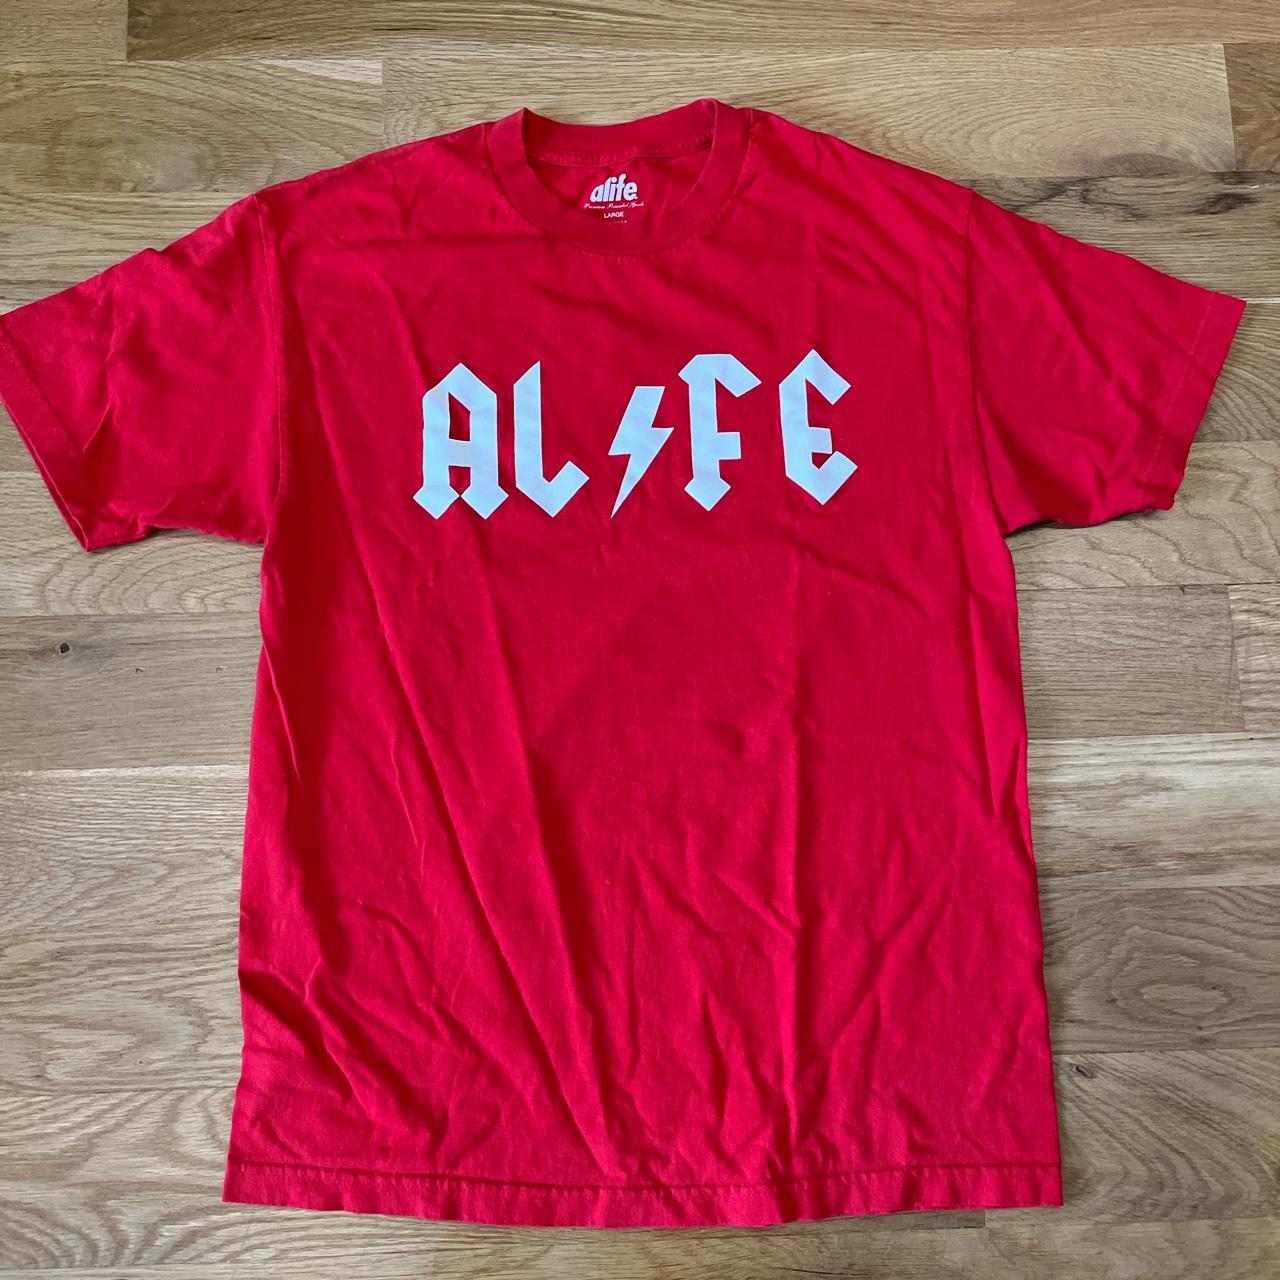 Alife Men's Red T-shirt